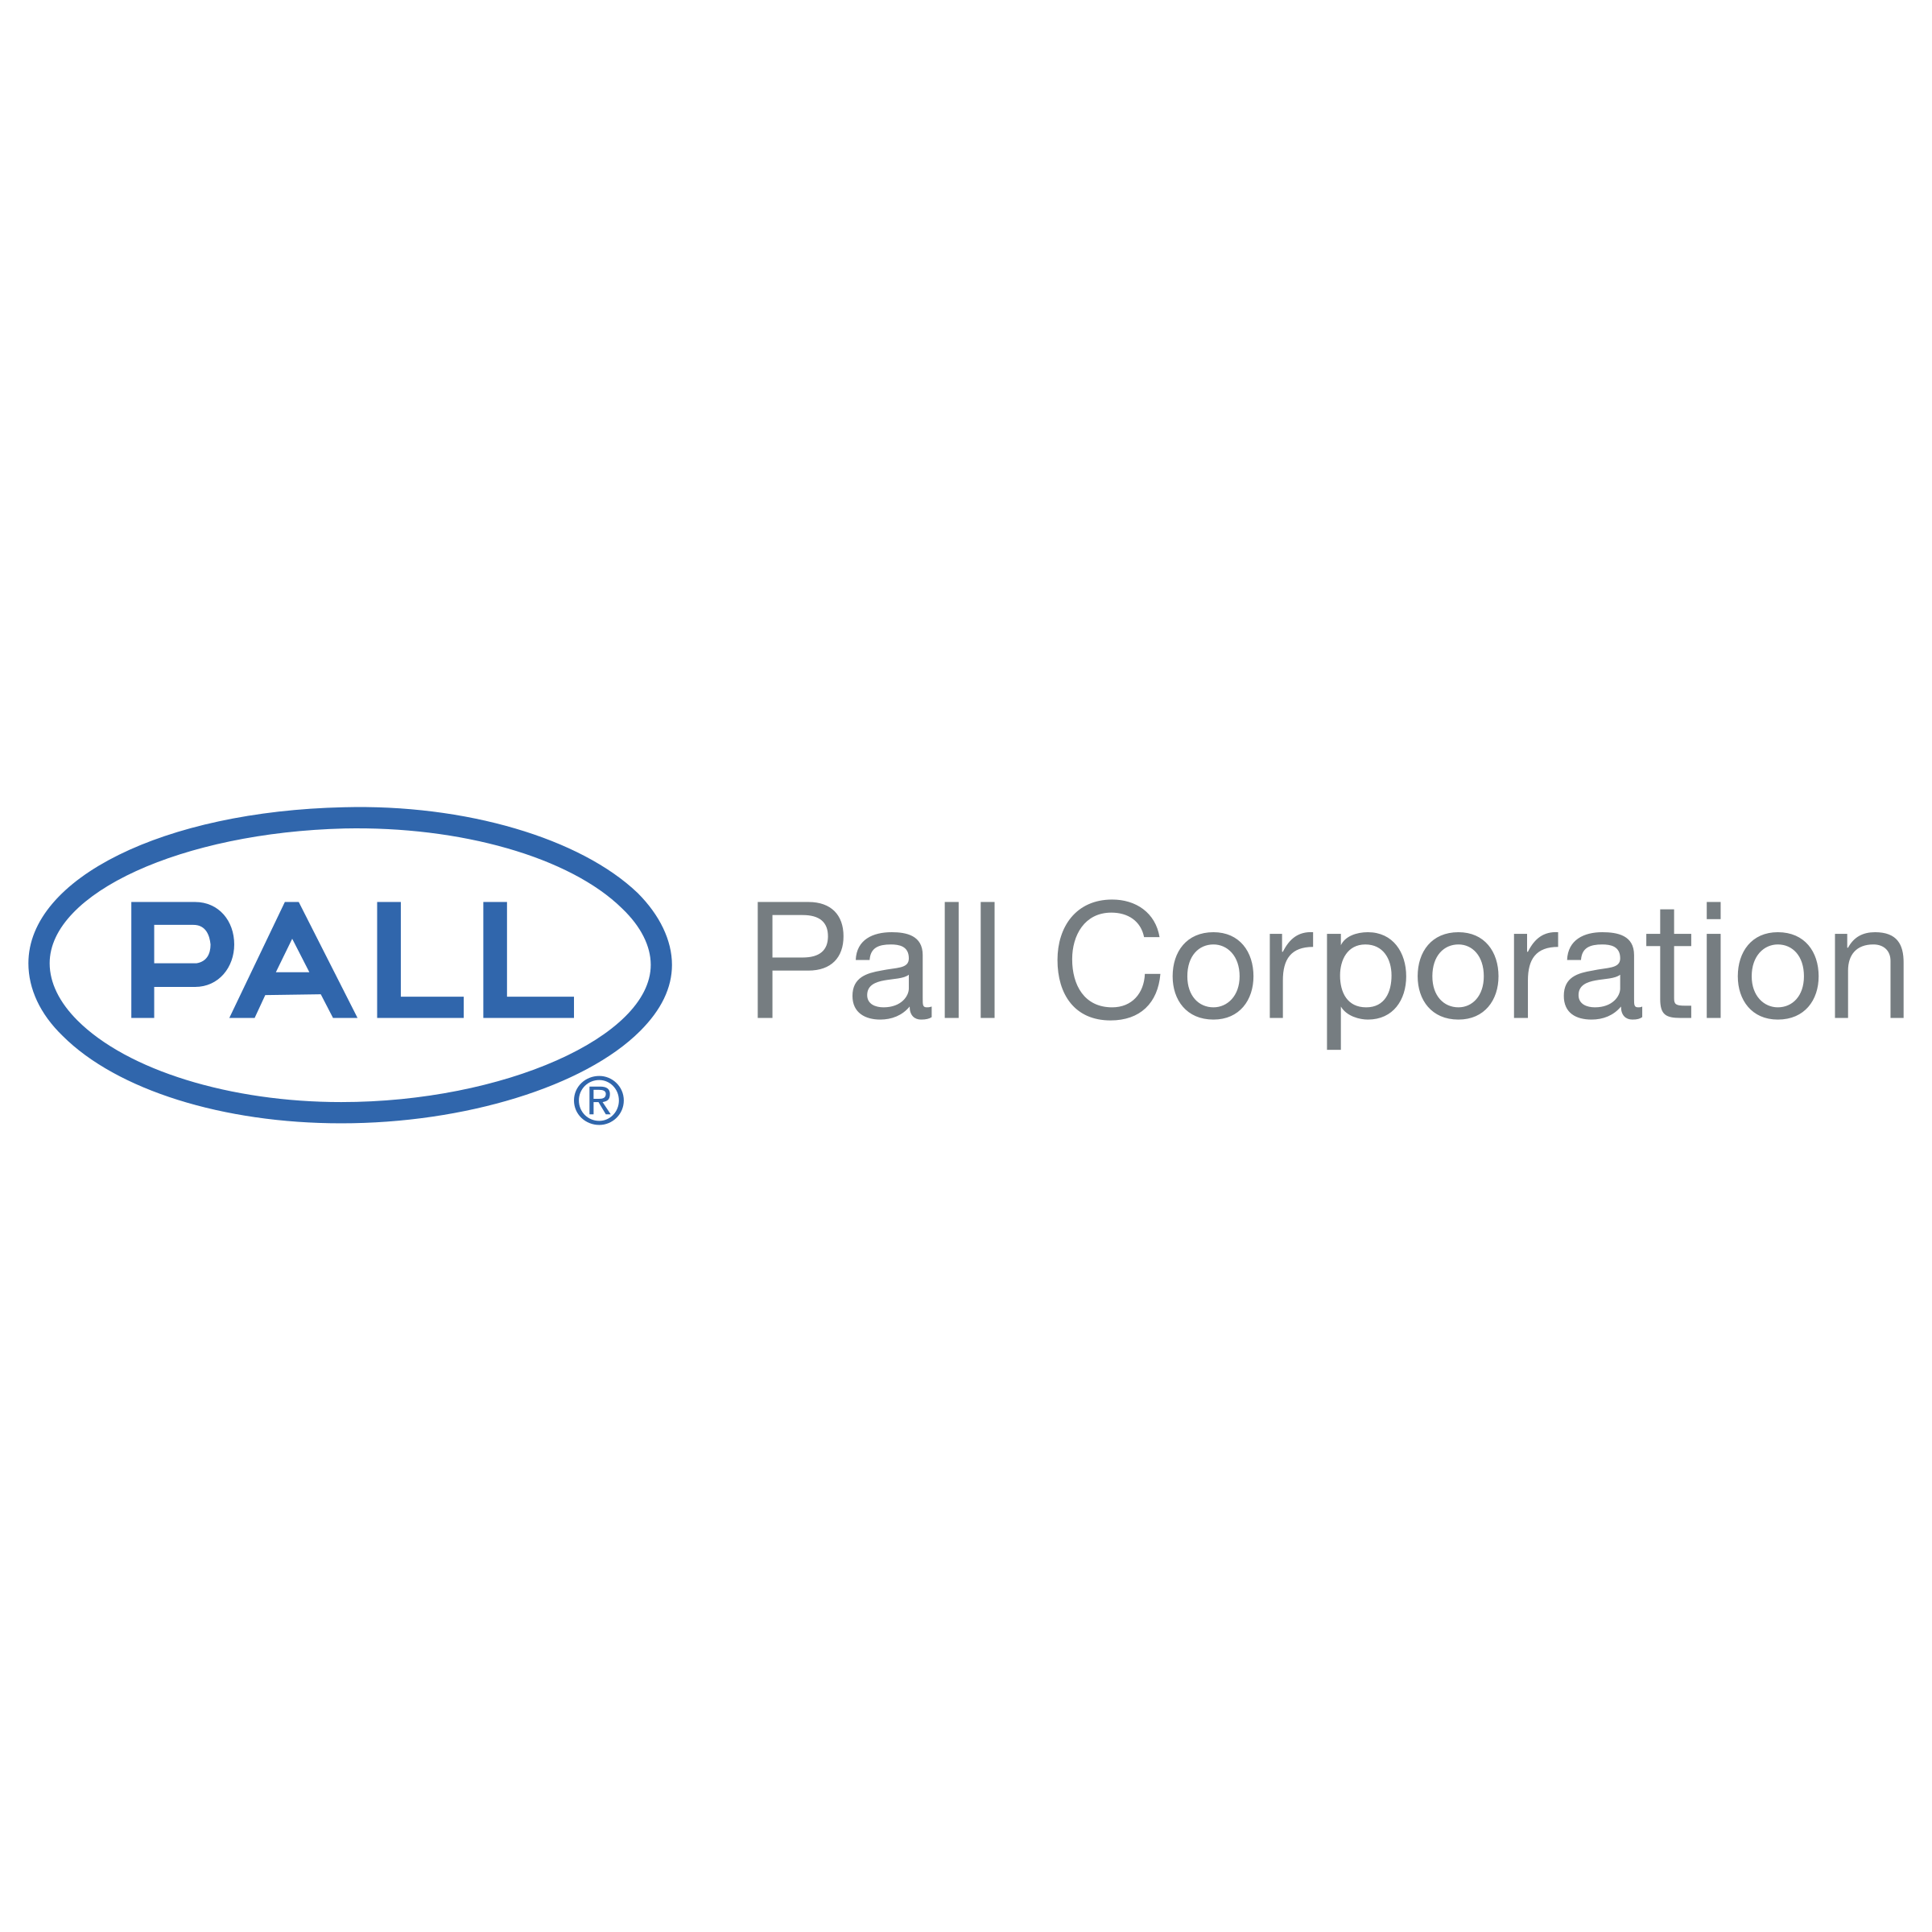 Pall Logo - Pall Logo PNG Transparent & SVG Vector - Freebie Supply